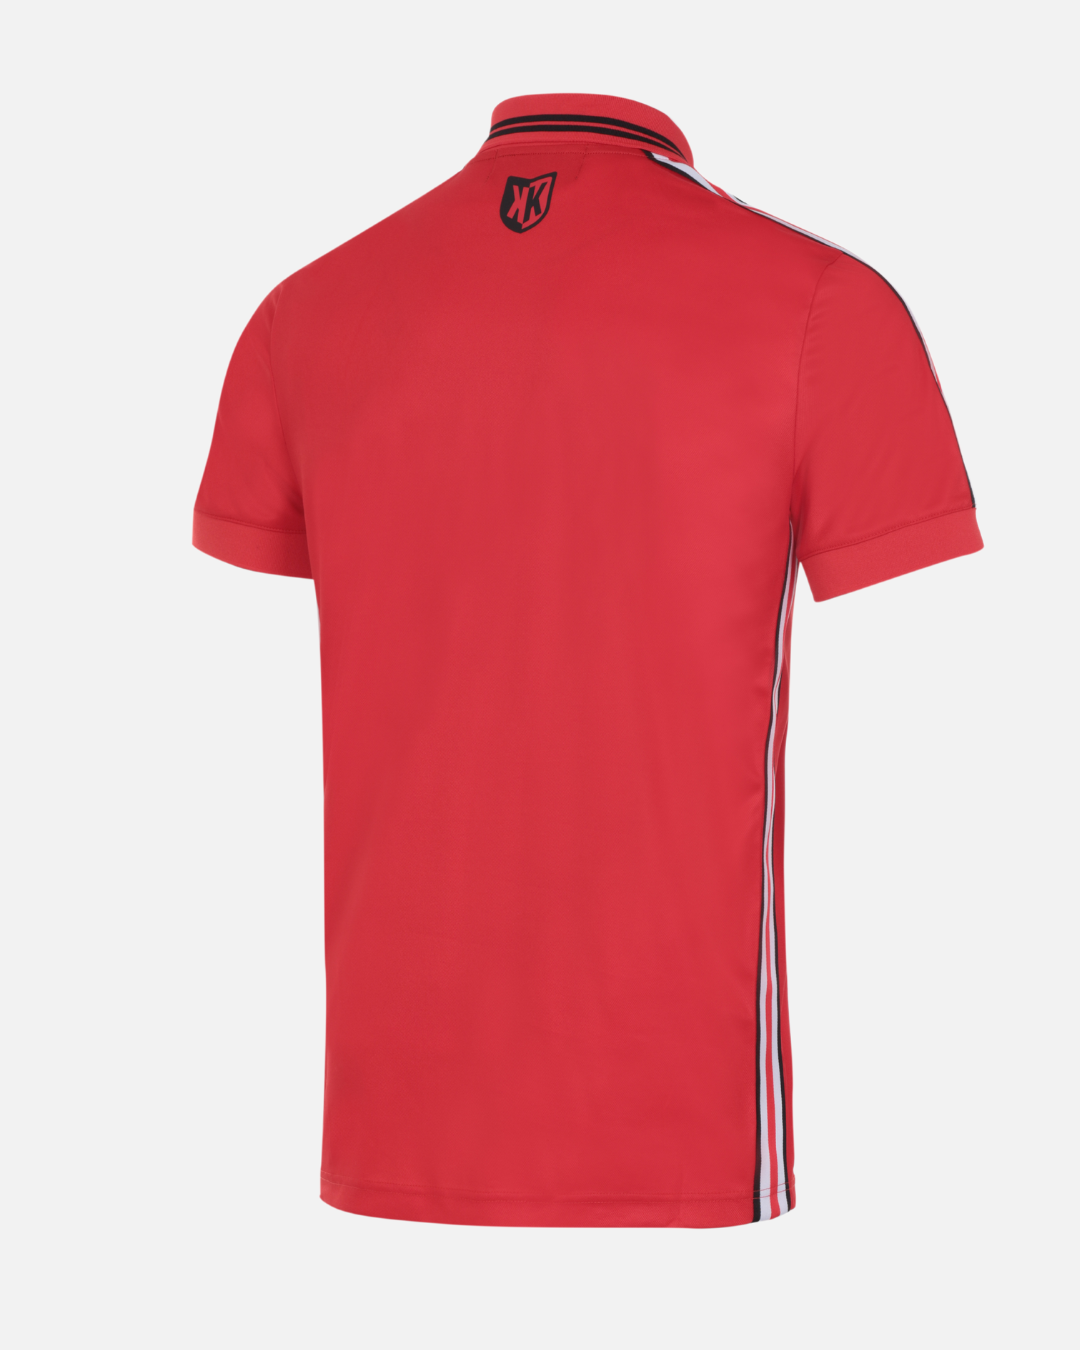 FK Teams Polo Shirt - Red/White/Black 